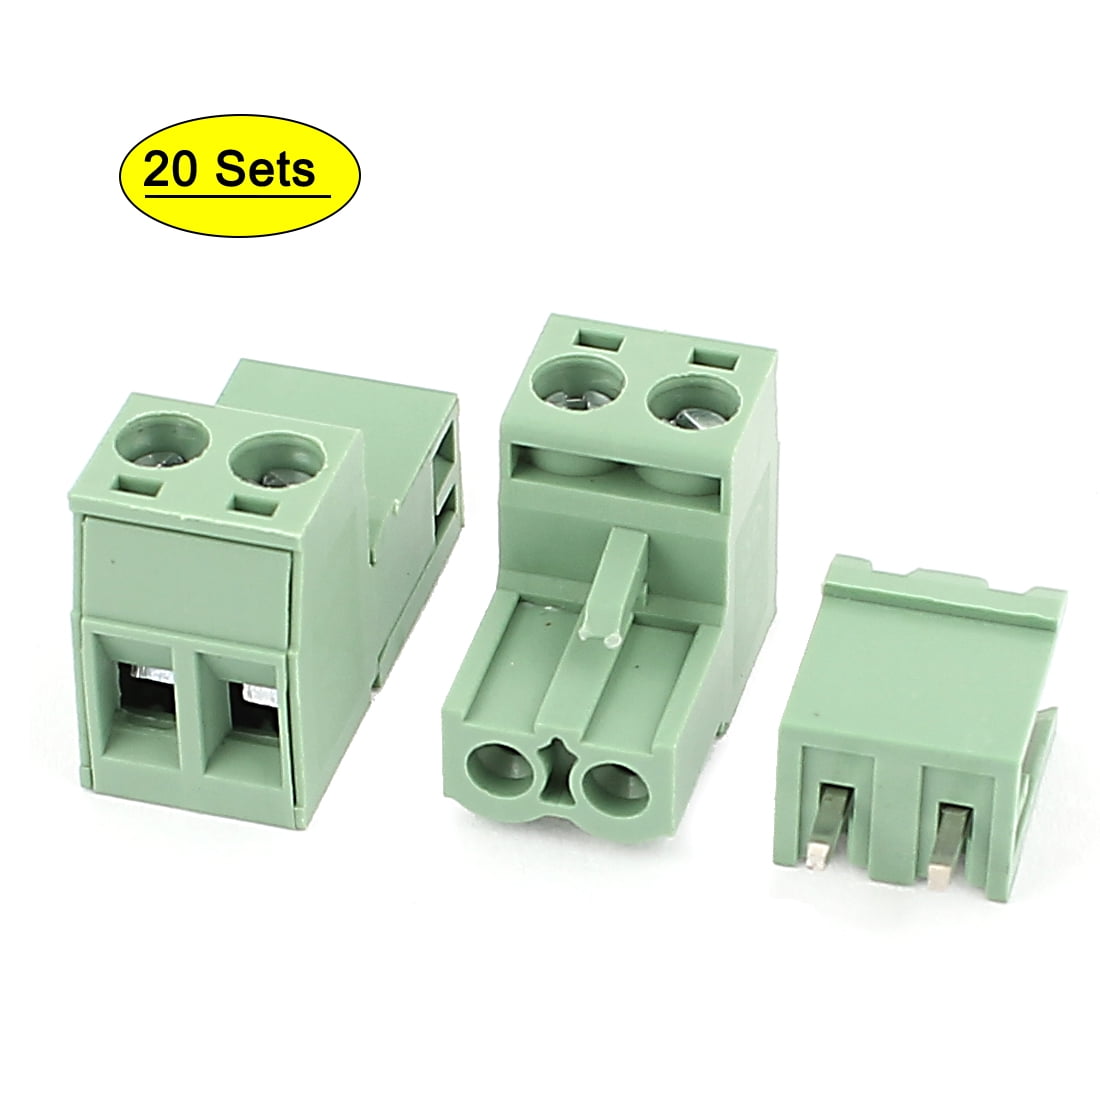 20 pcs 7 pin/way 5.08mm Screw Terminal Block Connector Green Pluggable Type 